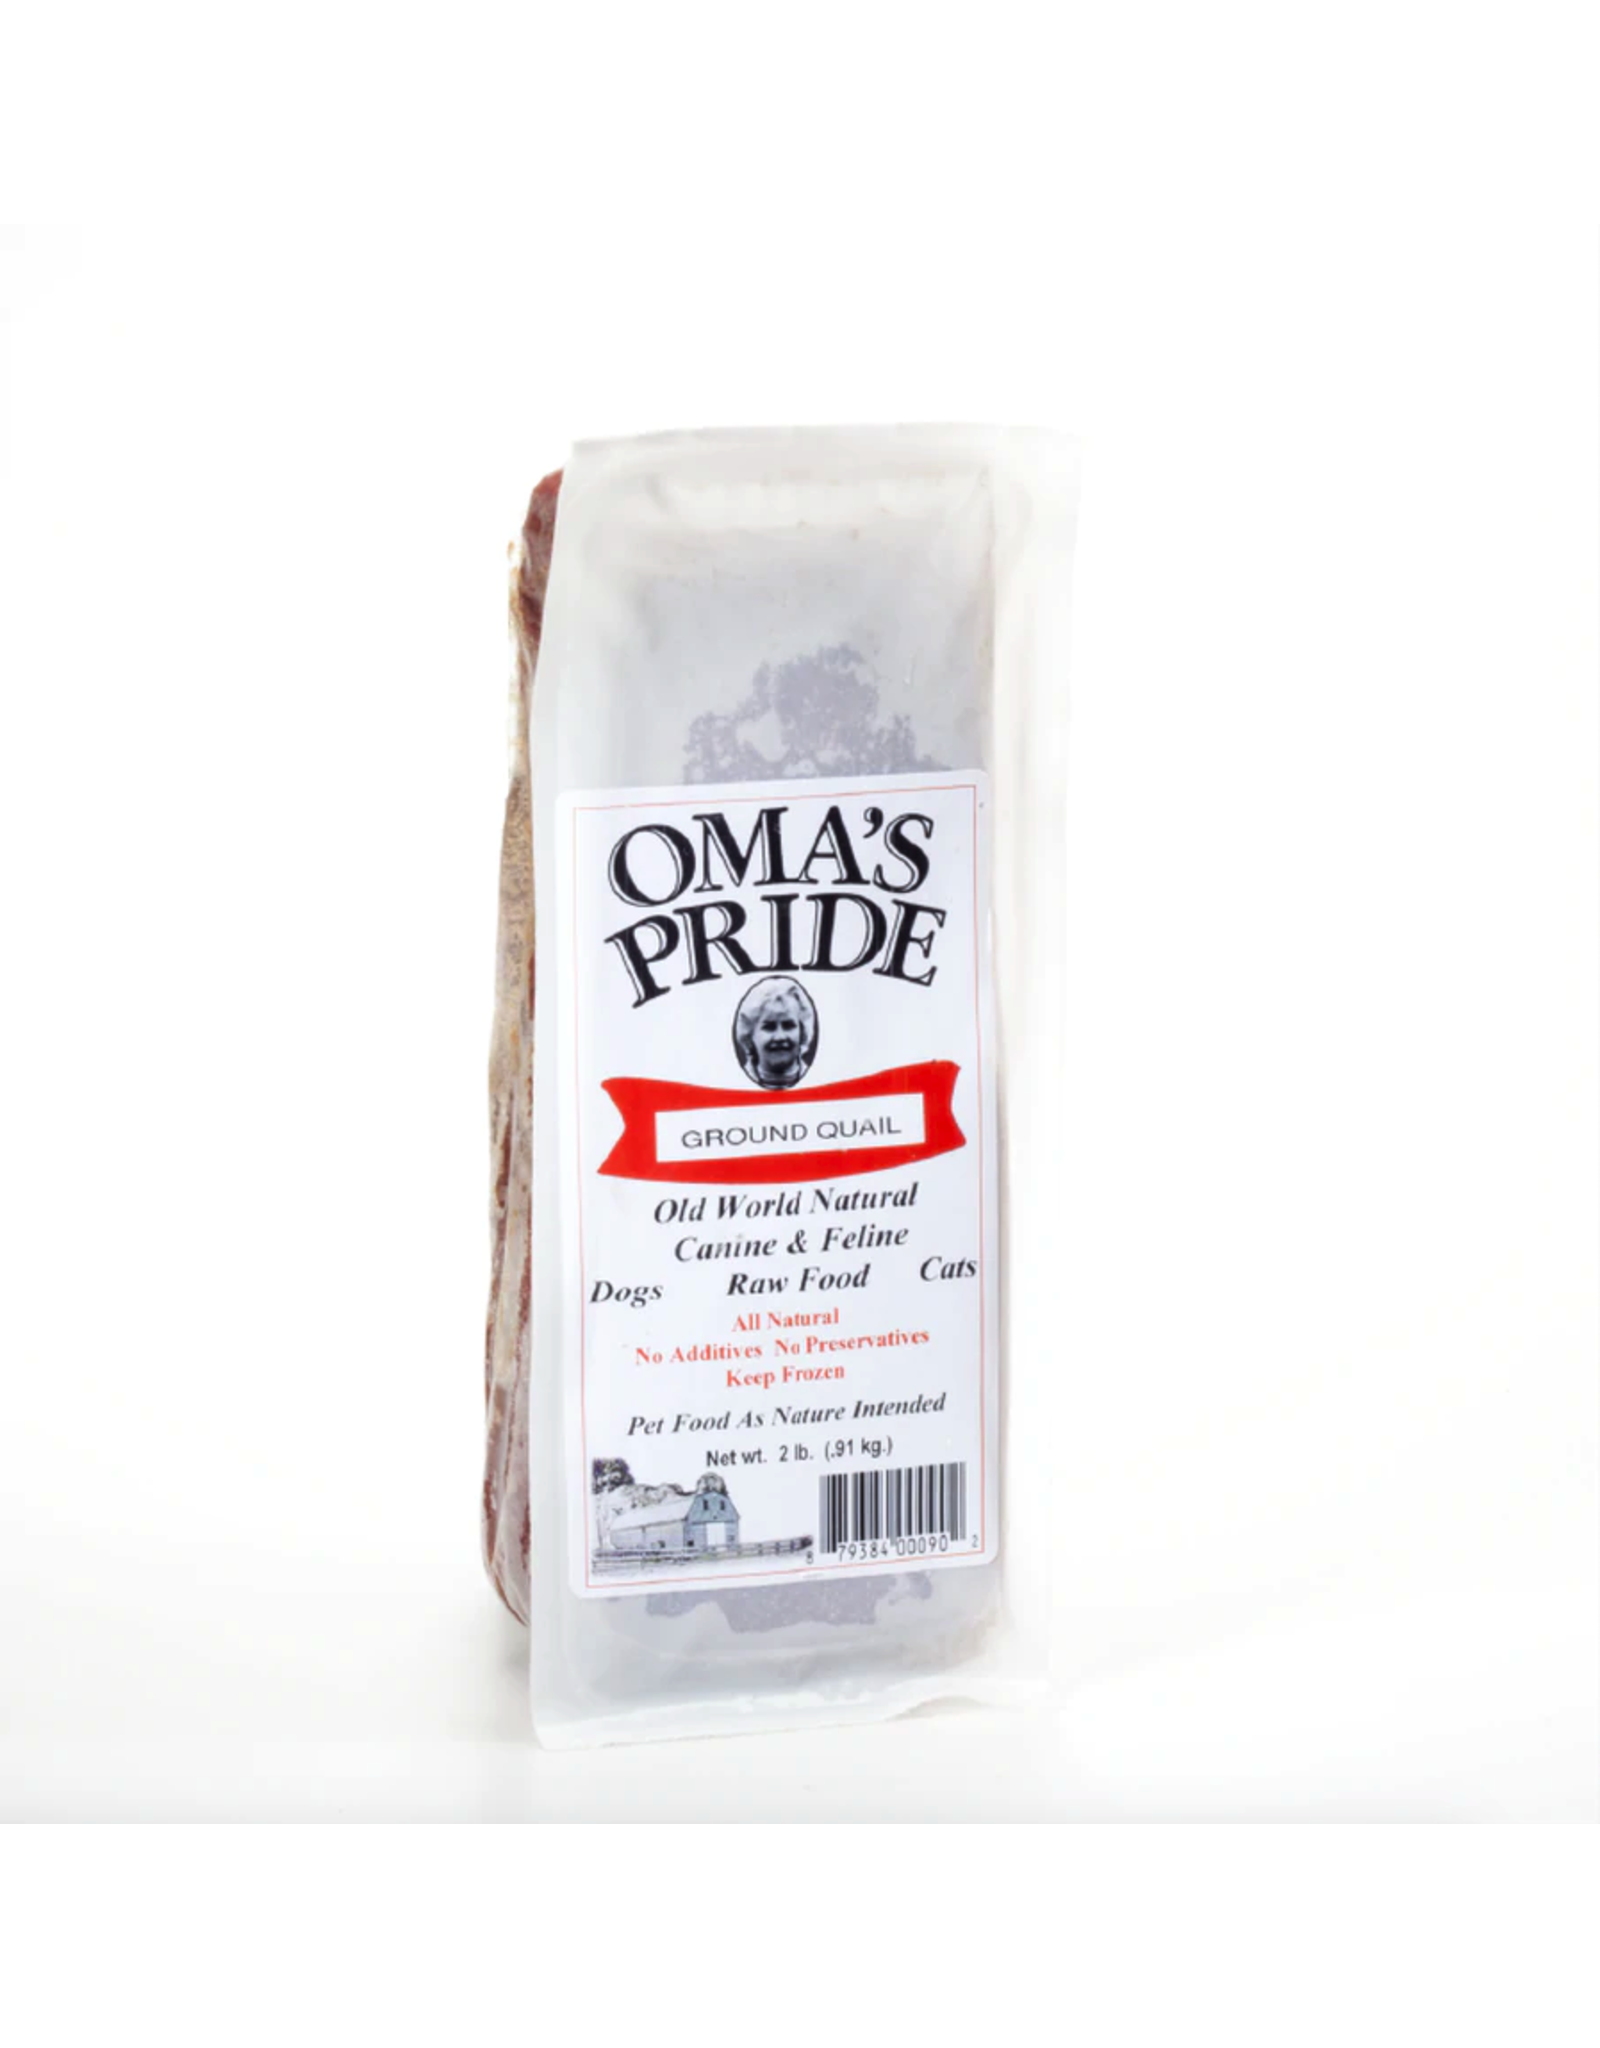 Oma's Pride Oma's Pride Ground Quail Frames 2lb